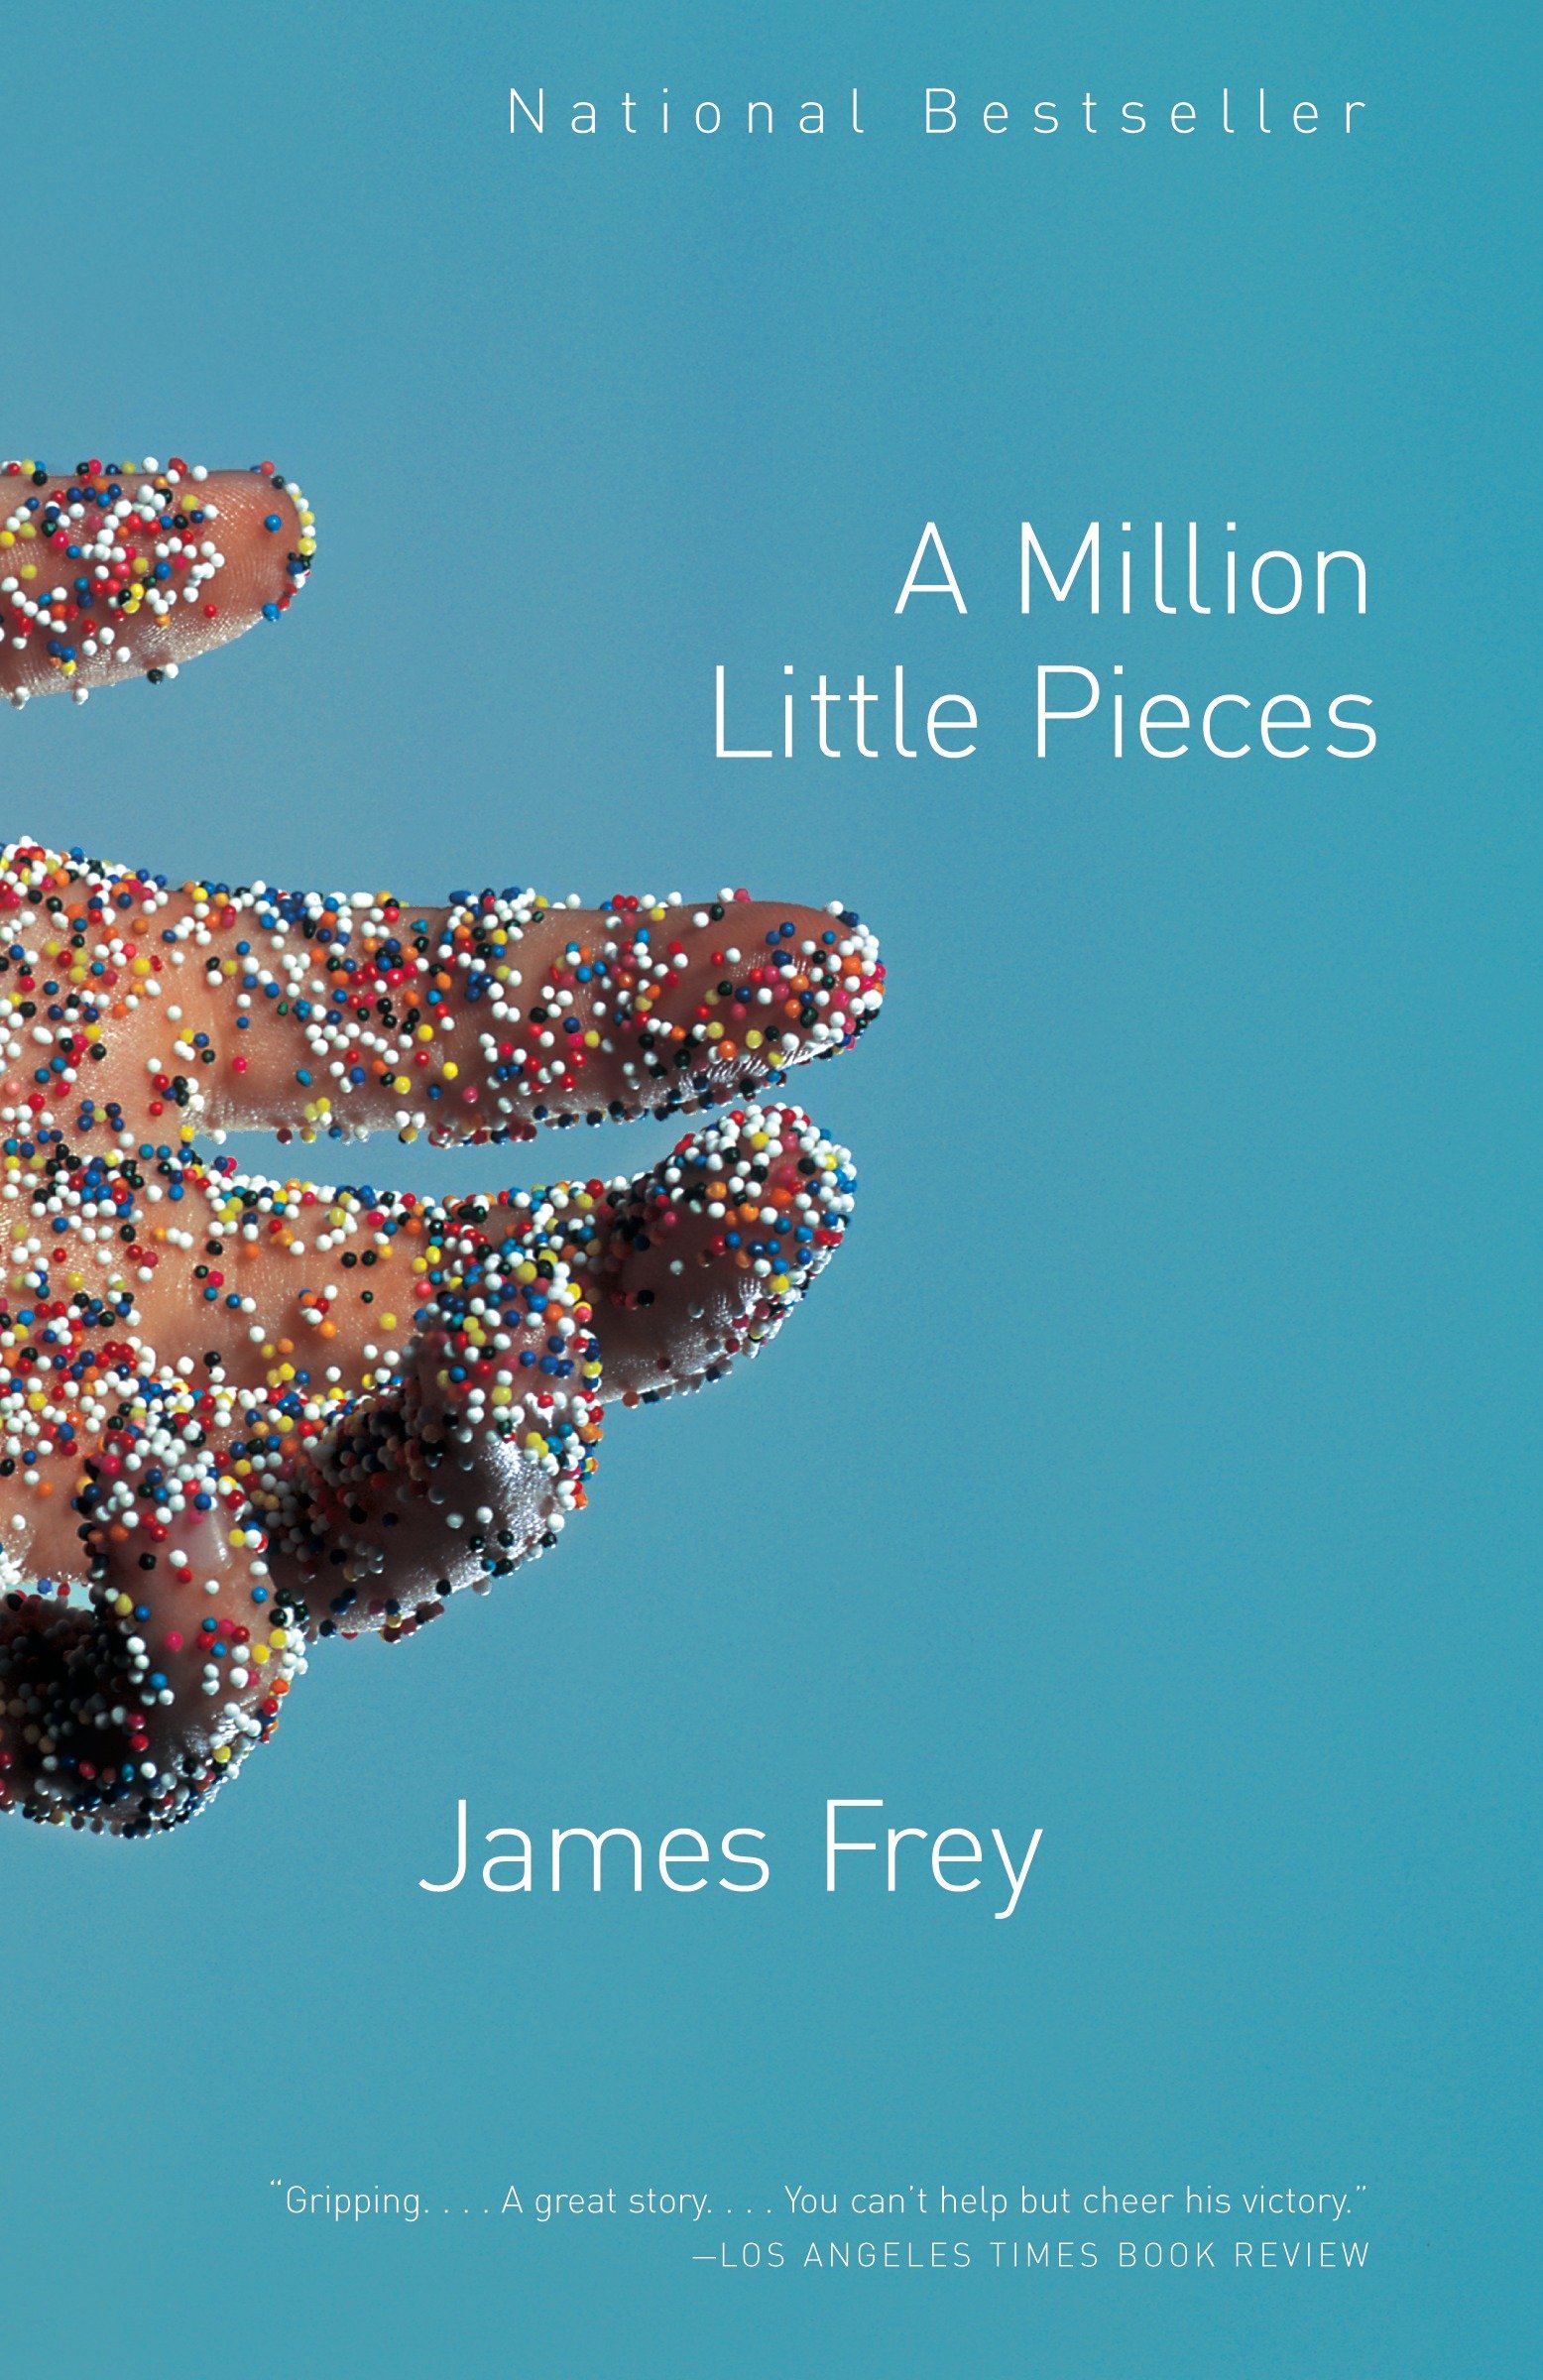 'A Million Little Pieces' by James Frey